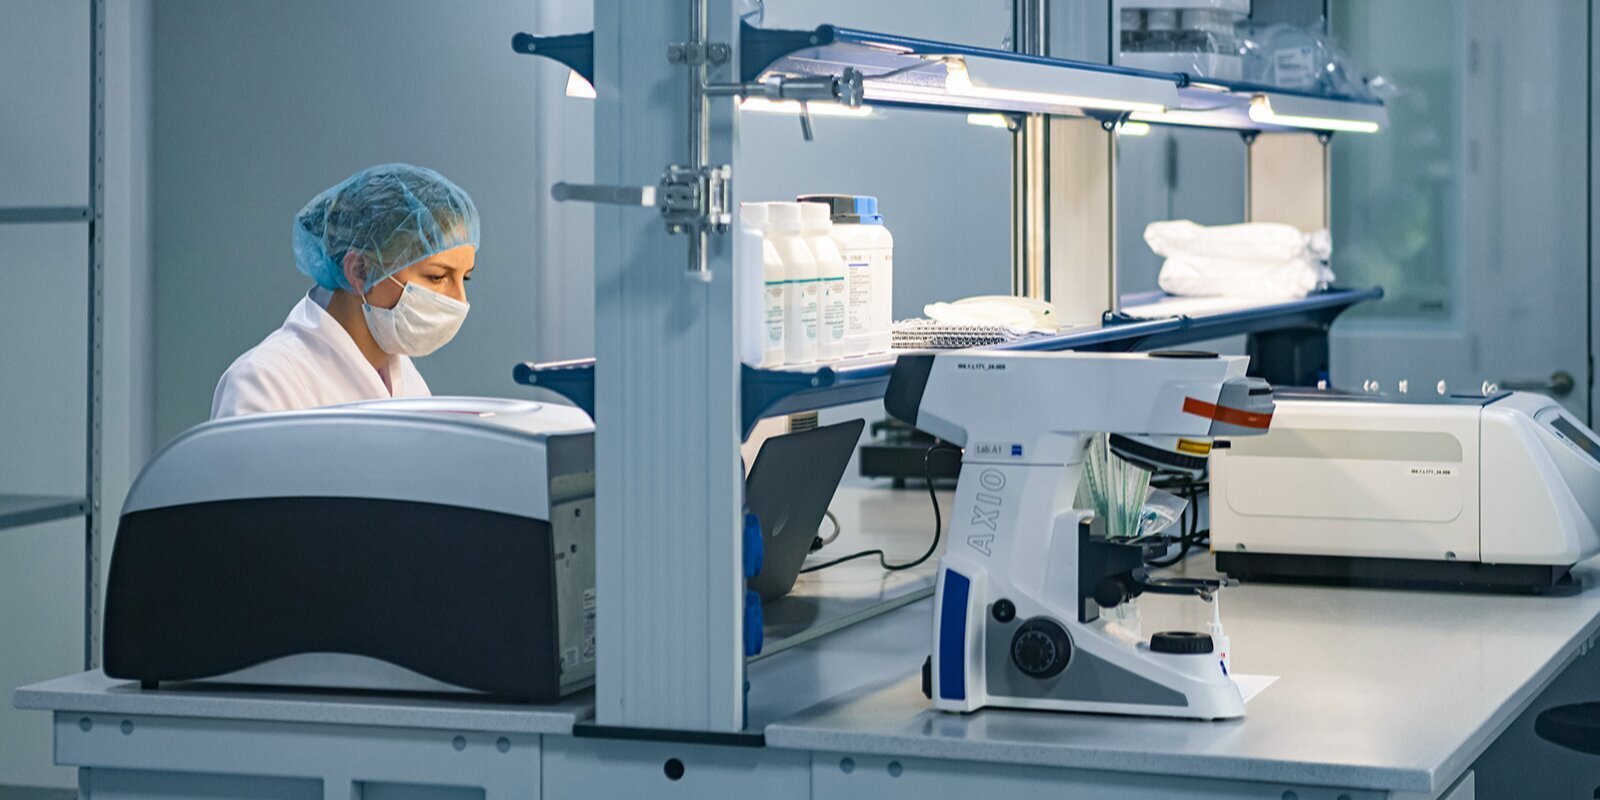 В ОЭЗ «Технополис «Москва» откроется производство медицинских тестов 